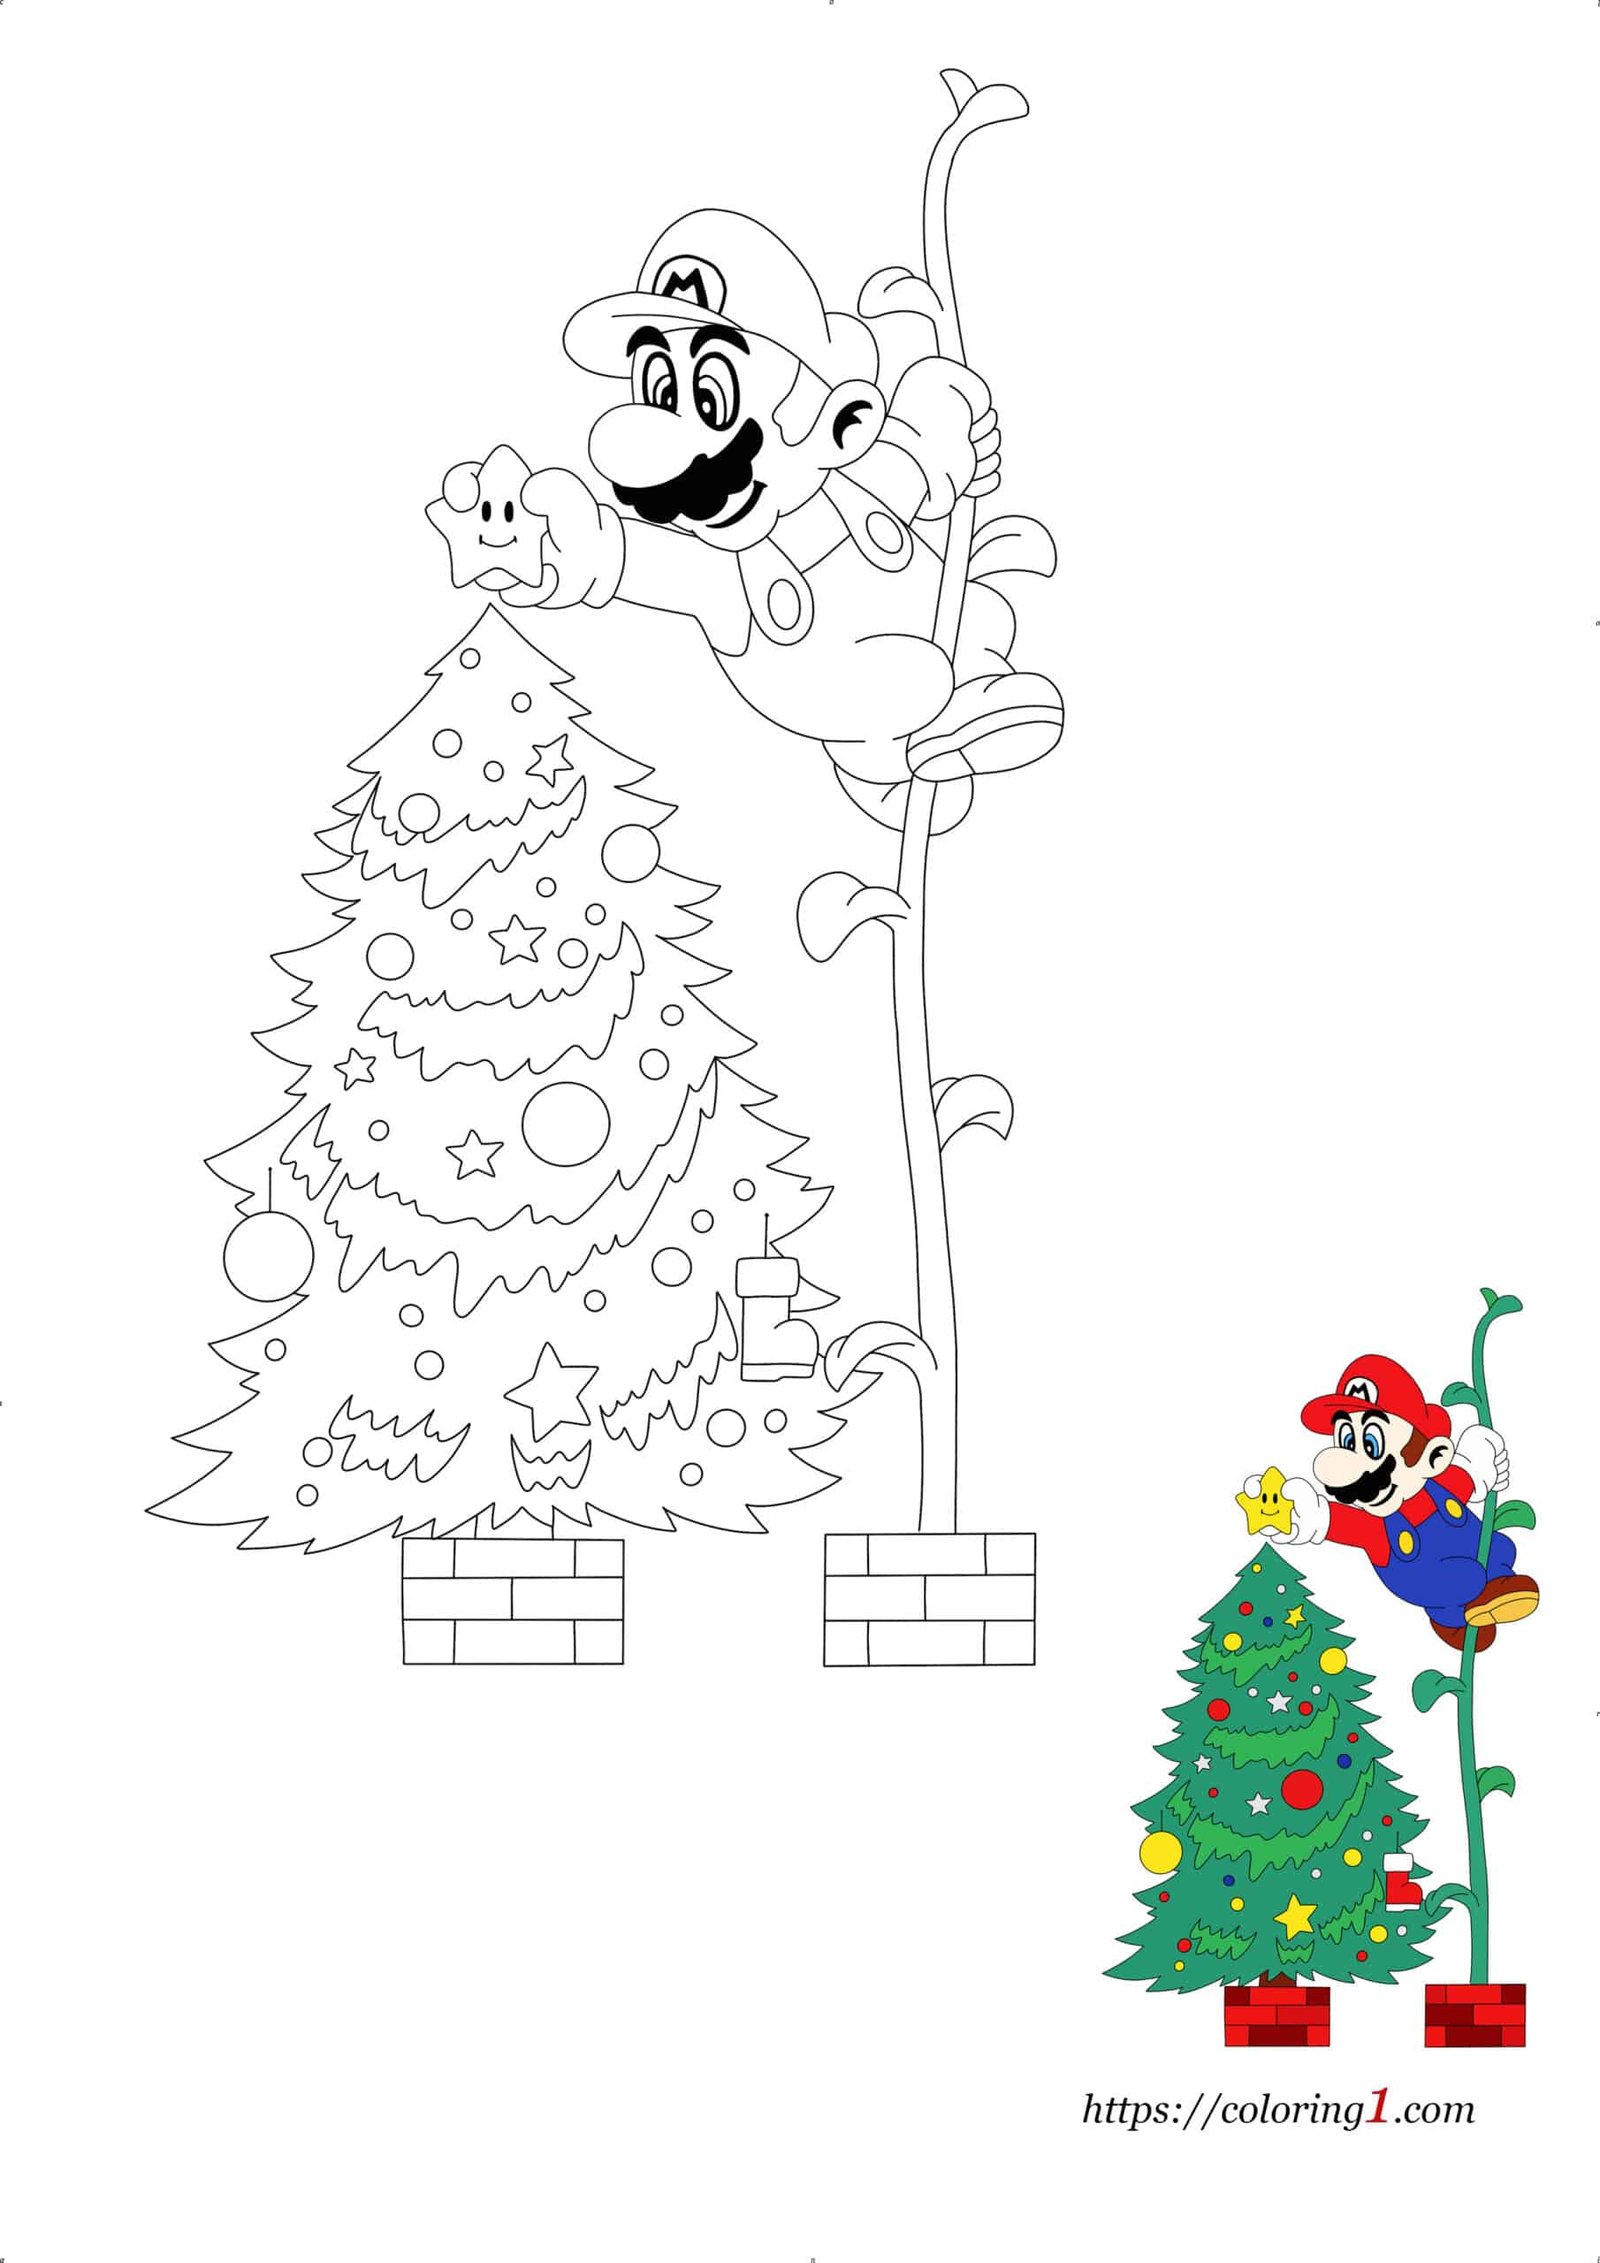 Mario Kerstboom kleurboek om online uit te printen